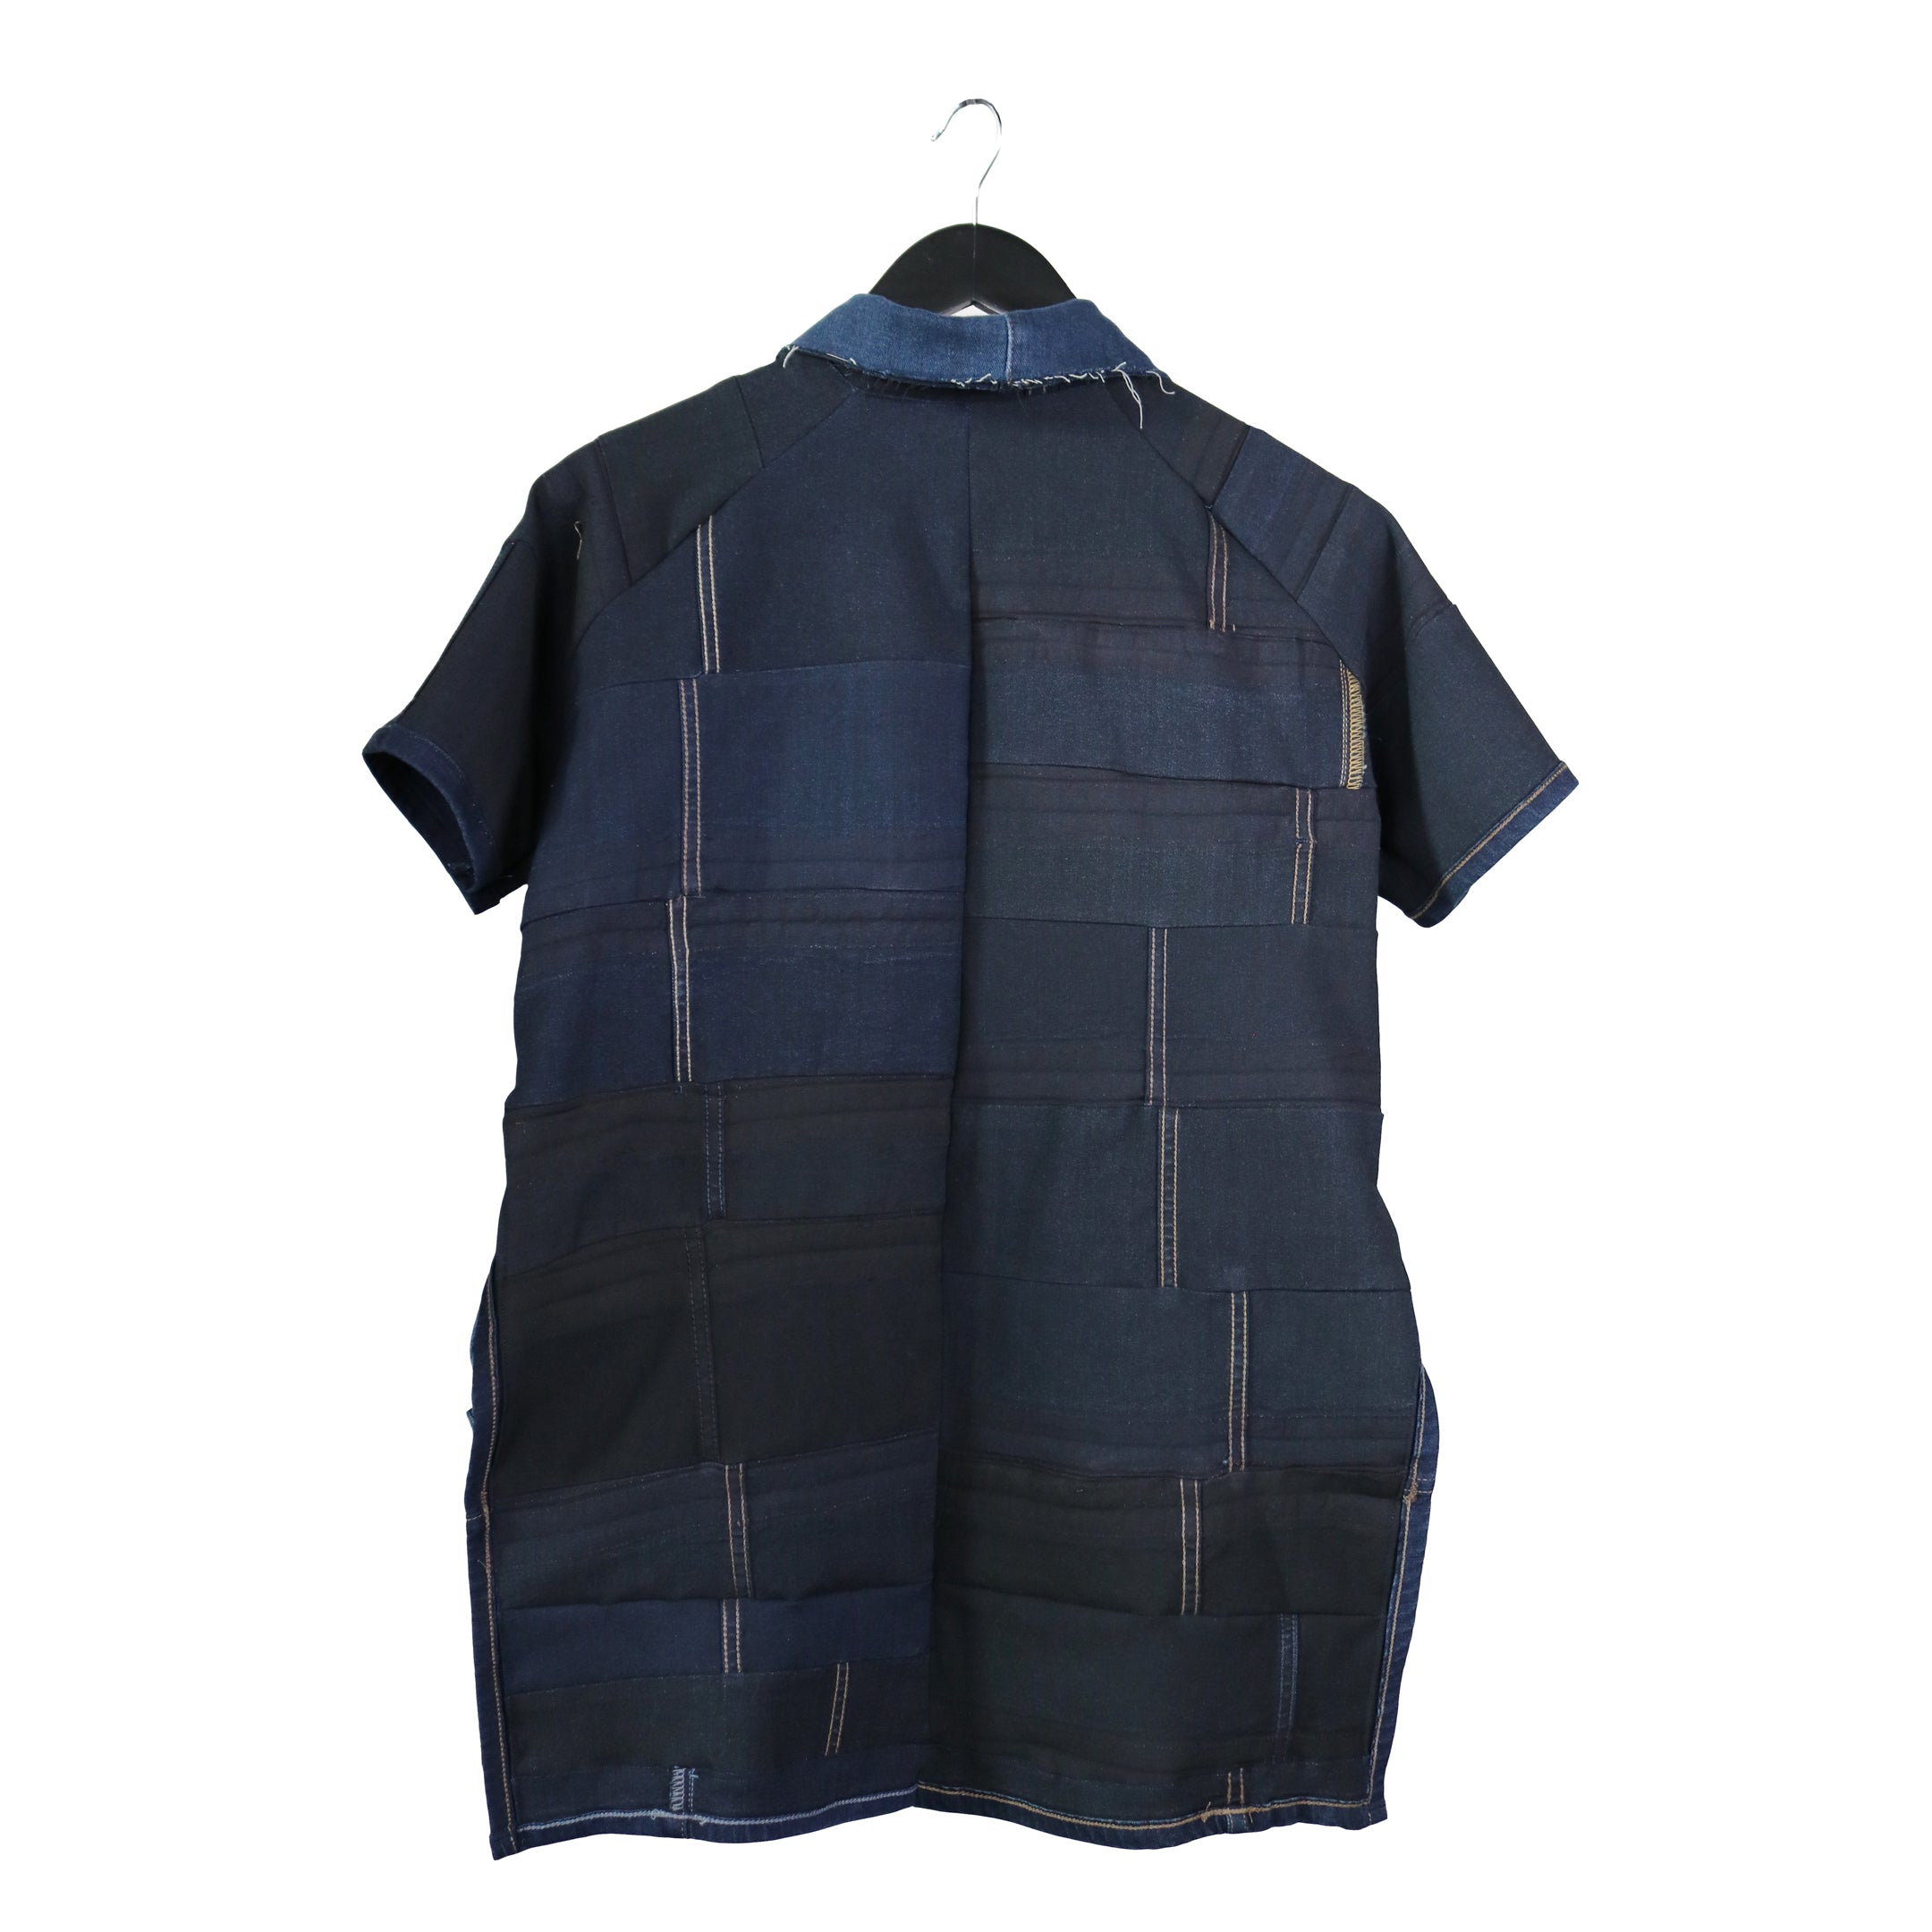 #REMIXbyStevieLeigh stretchy reversible button down shirt